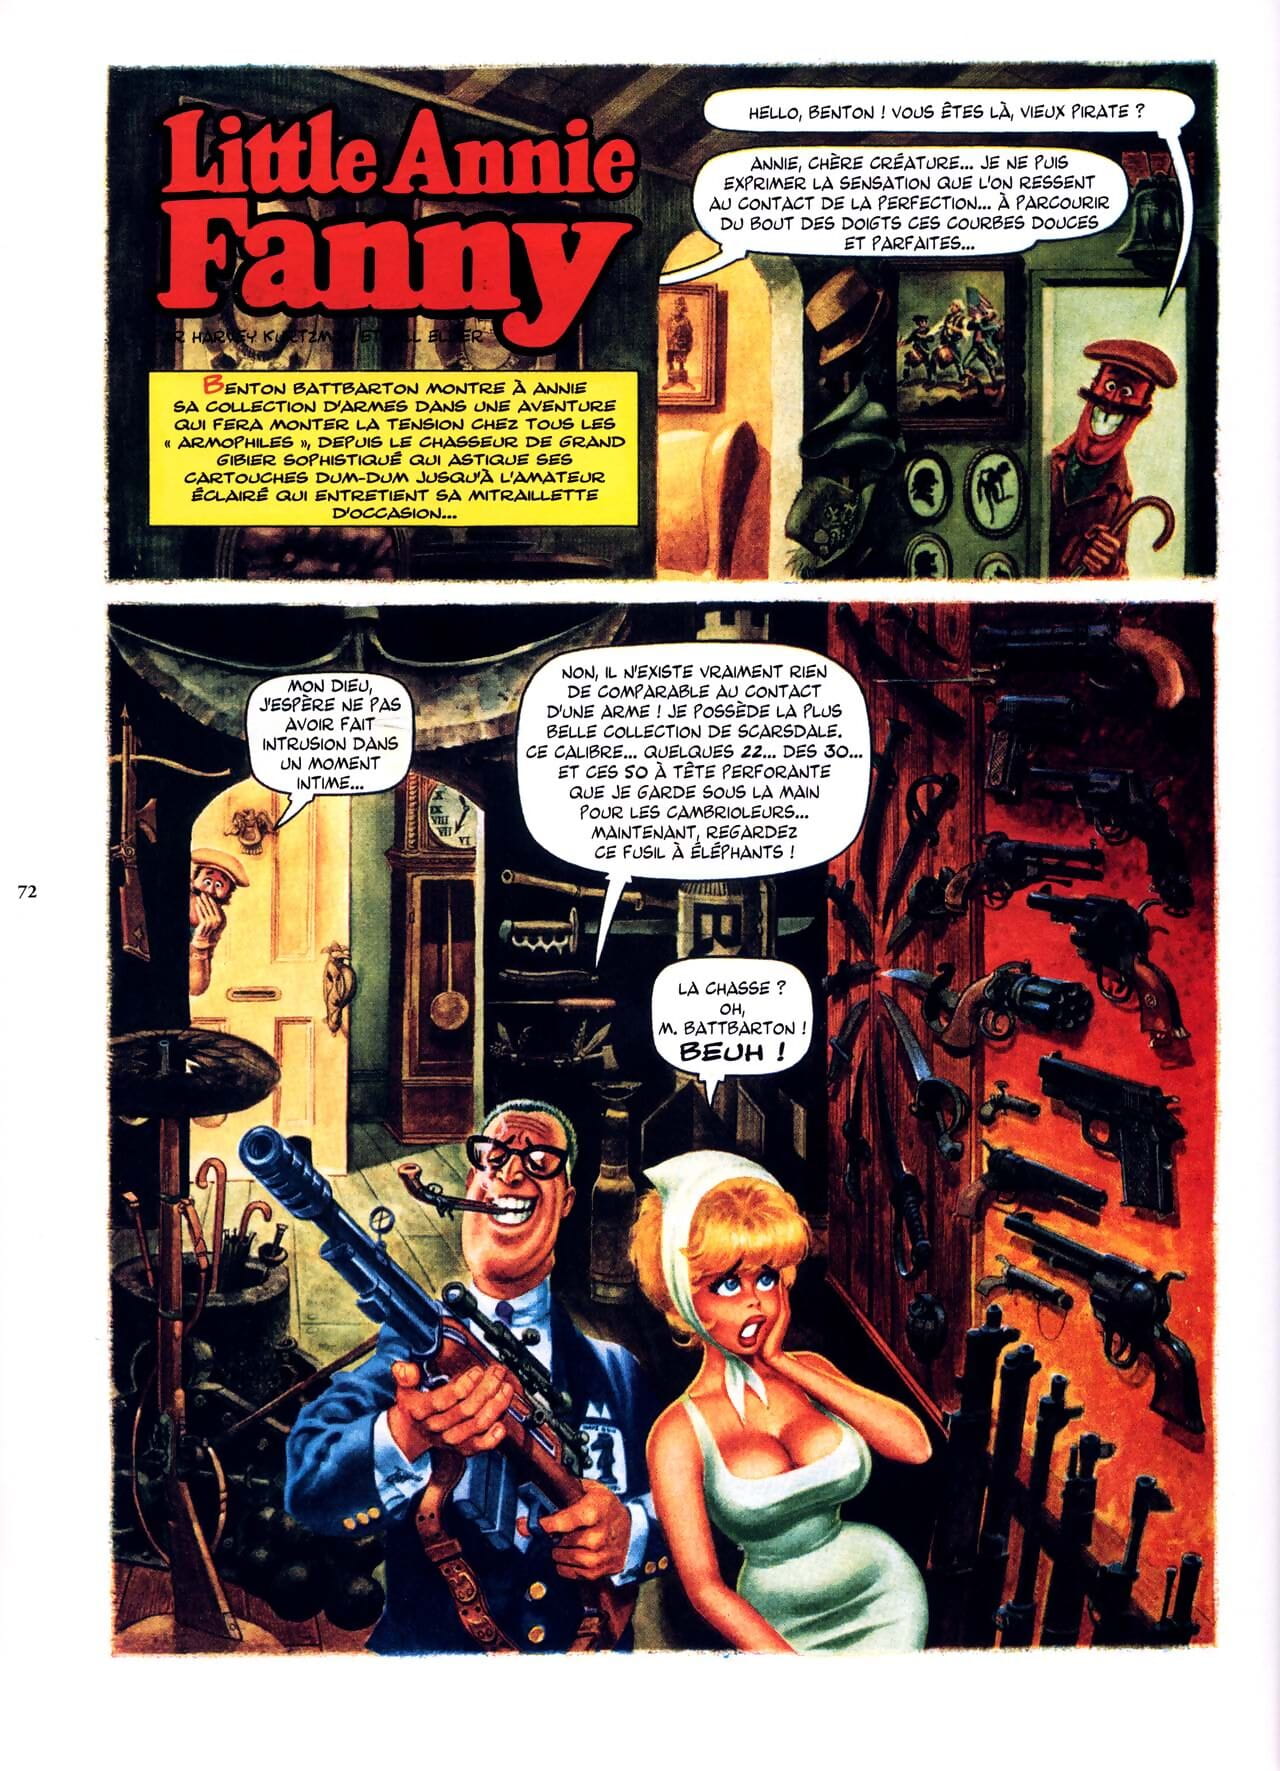 Nhỏ Annie fanny vol 1 - 1962-1965 - phần 4 page 1